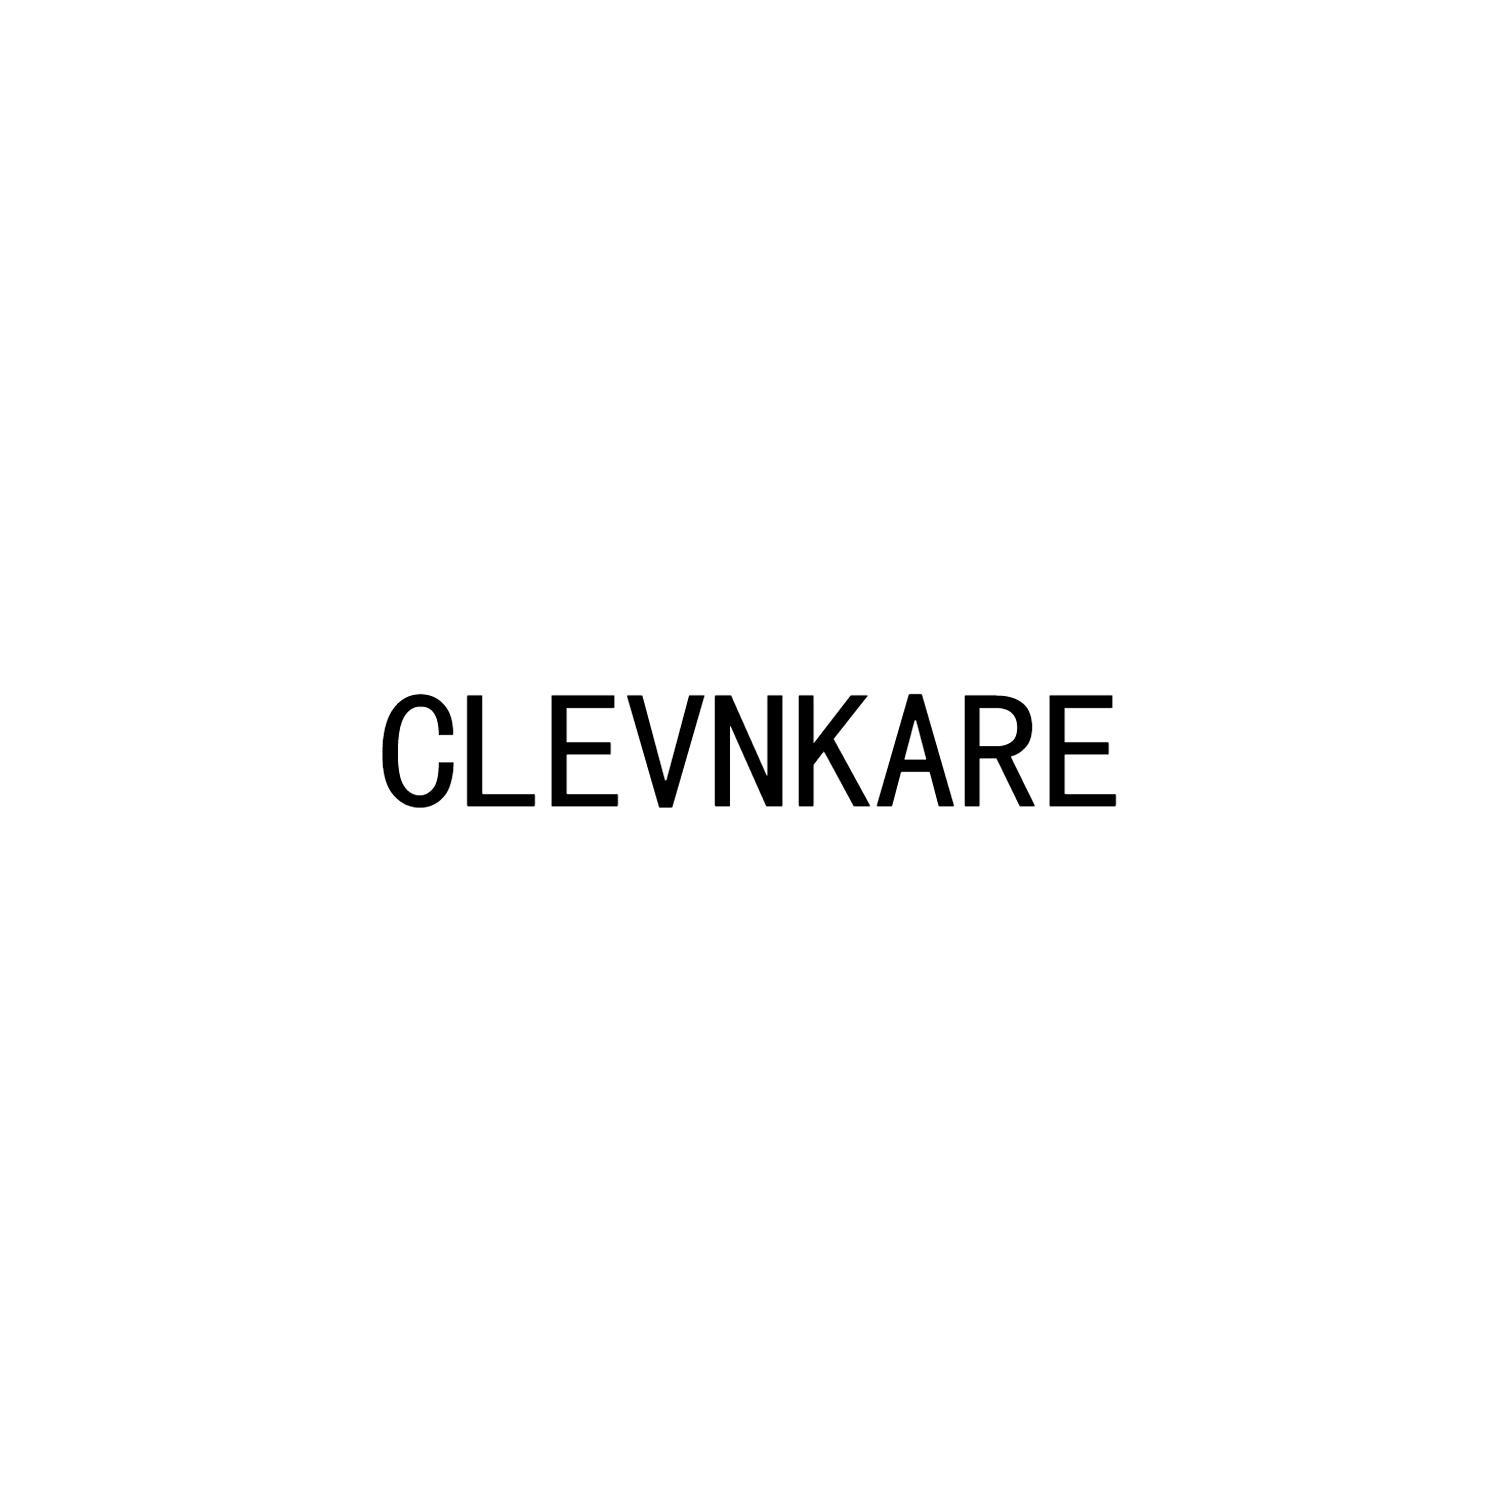 CLEVNKARE